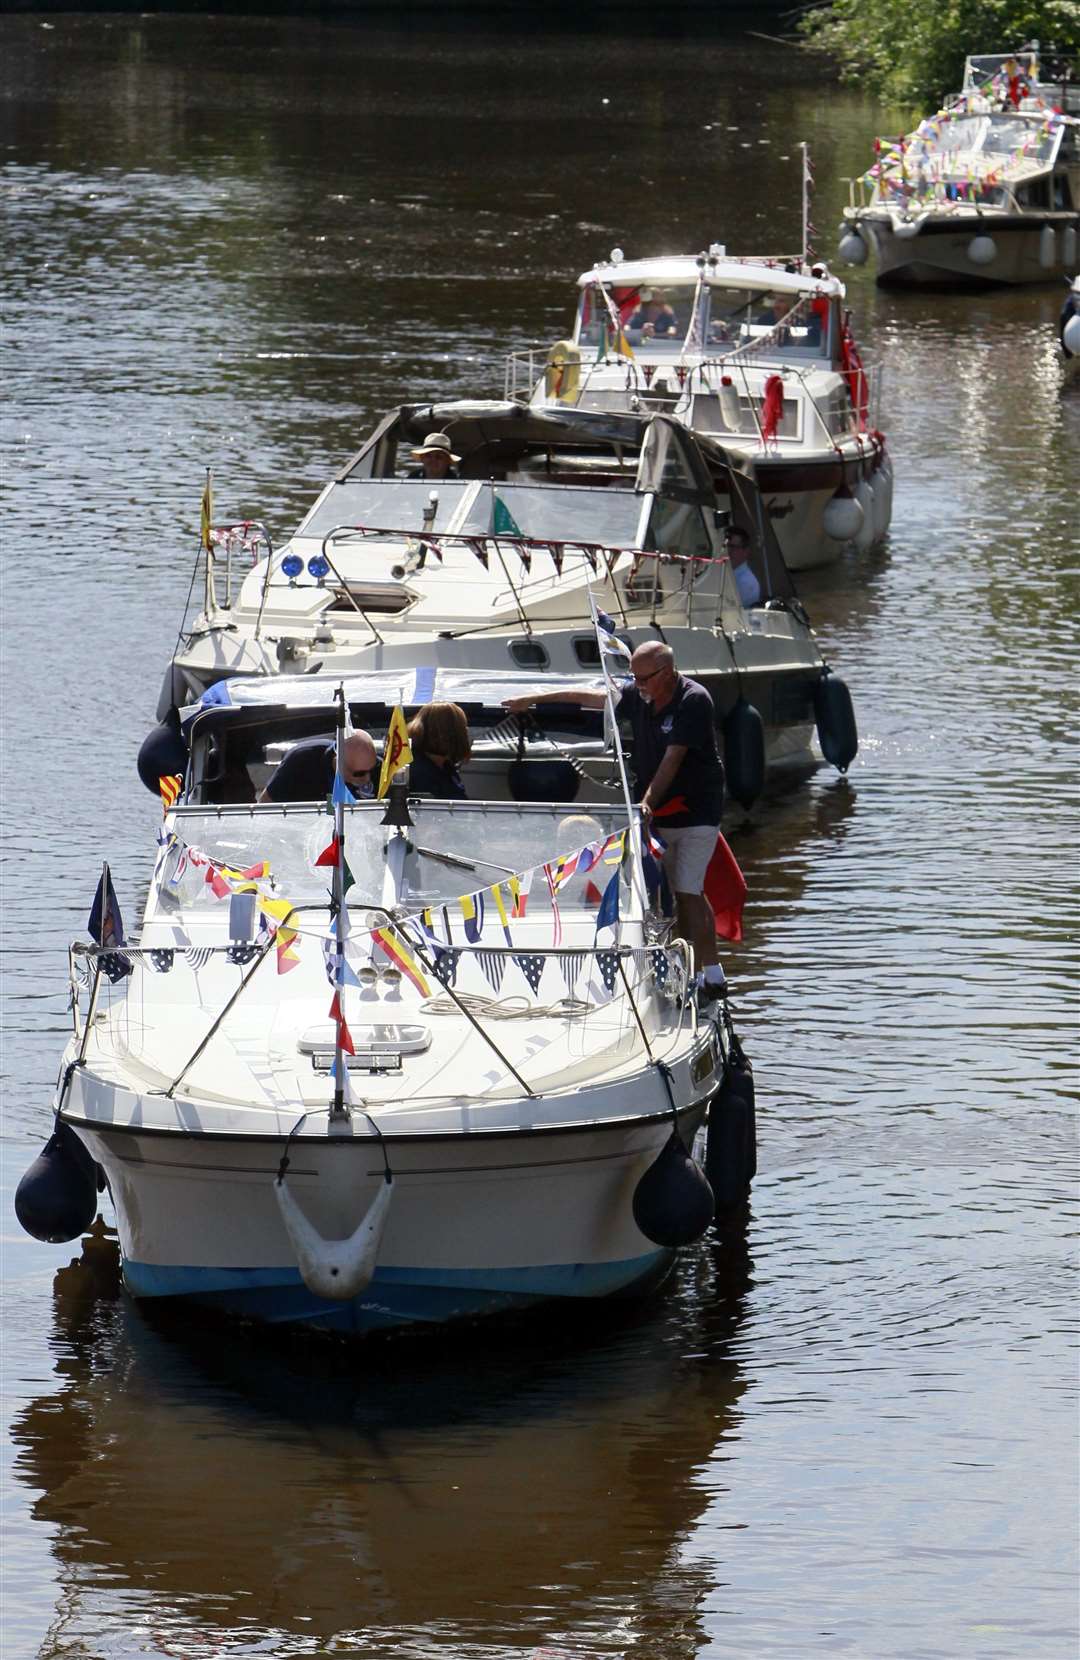 The Mayor's swan-upping cruise and flotilla